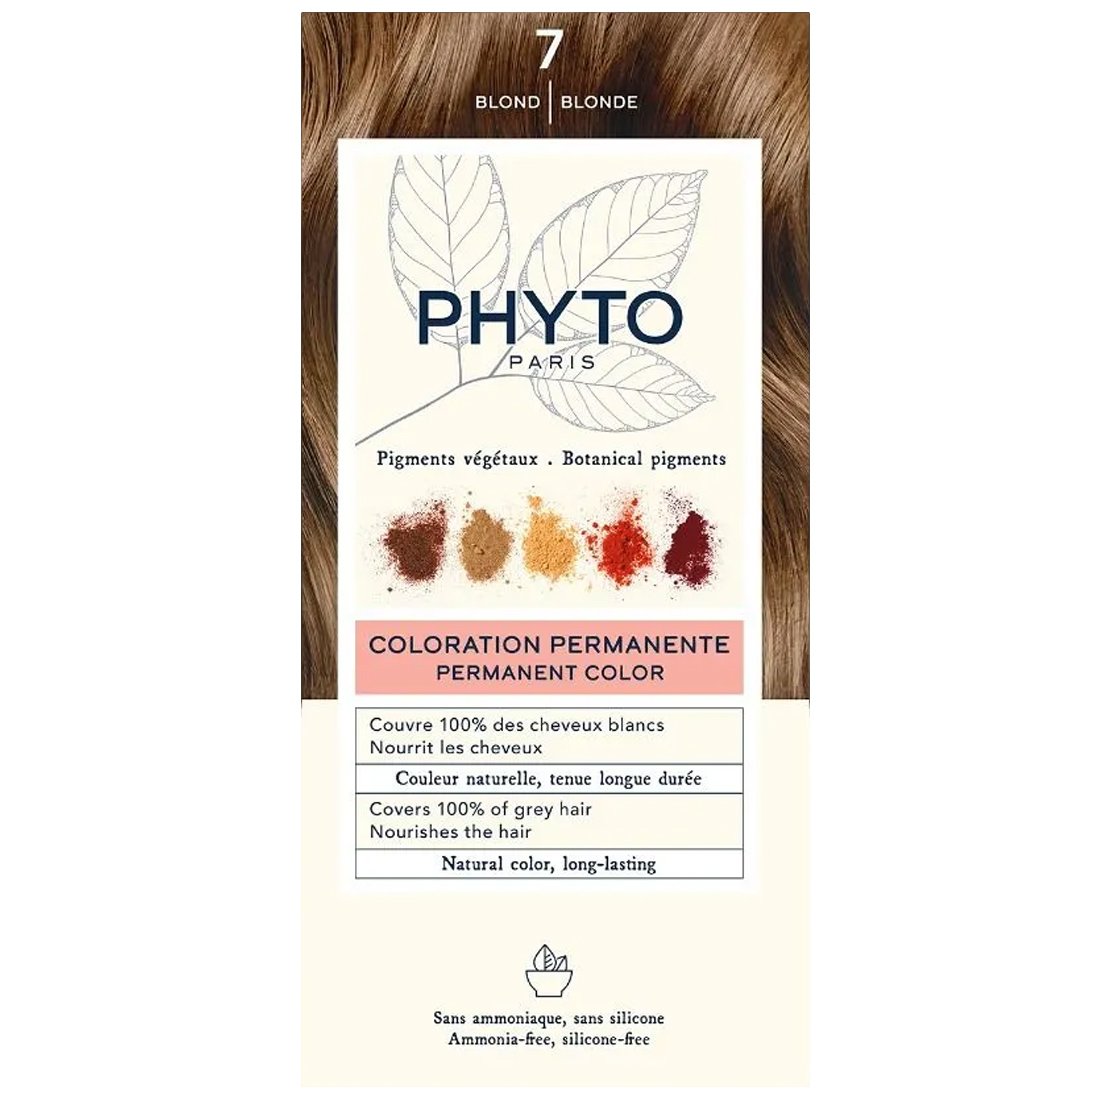 Phyto Permanent Hair Color Kit Μόνιμη Βαφή Μαλλιών με Φυτικές Χρωστικές, Χωρίς Αμμωνία 1 Τεμάχιο – 7 Ξανθό